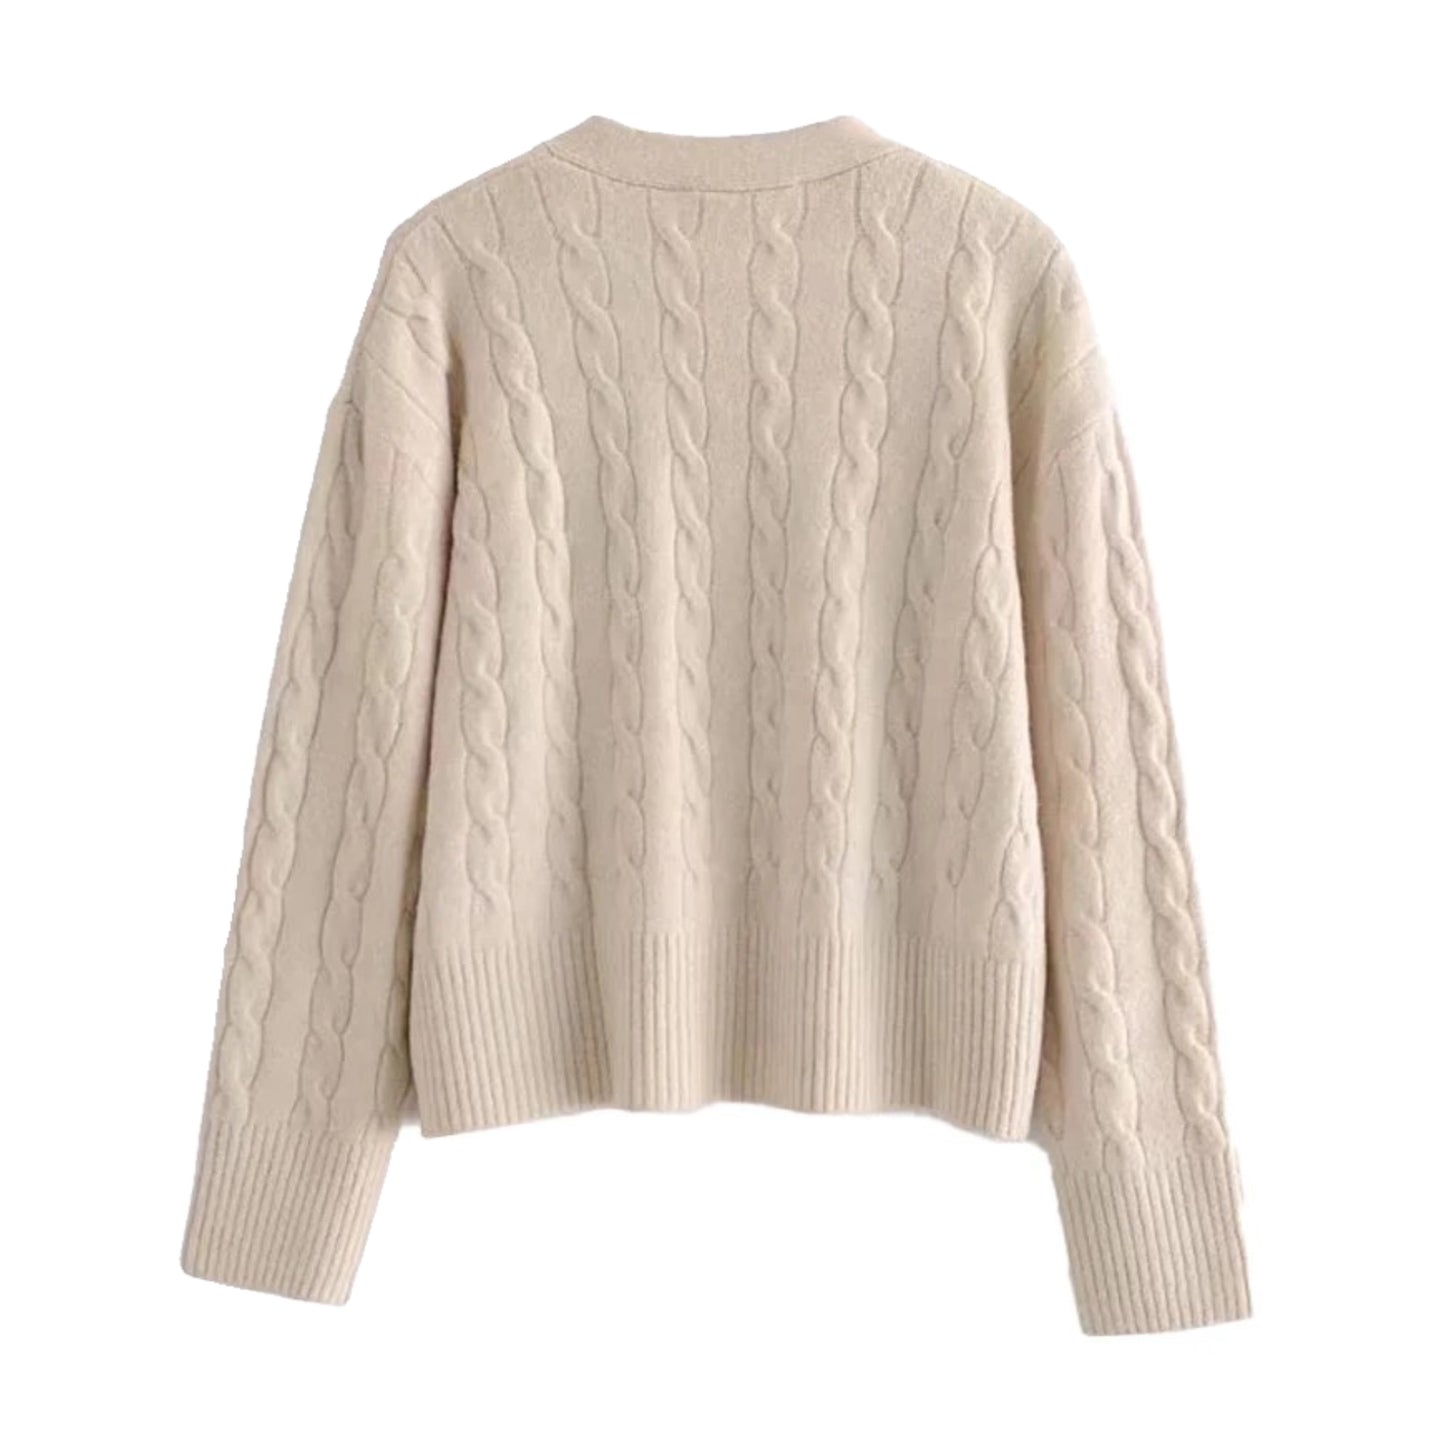 Light Beige Knitted Cardigan Sweater